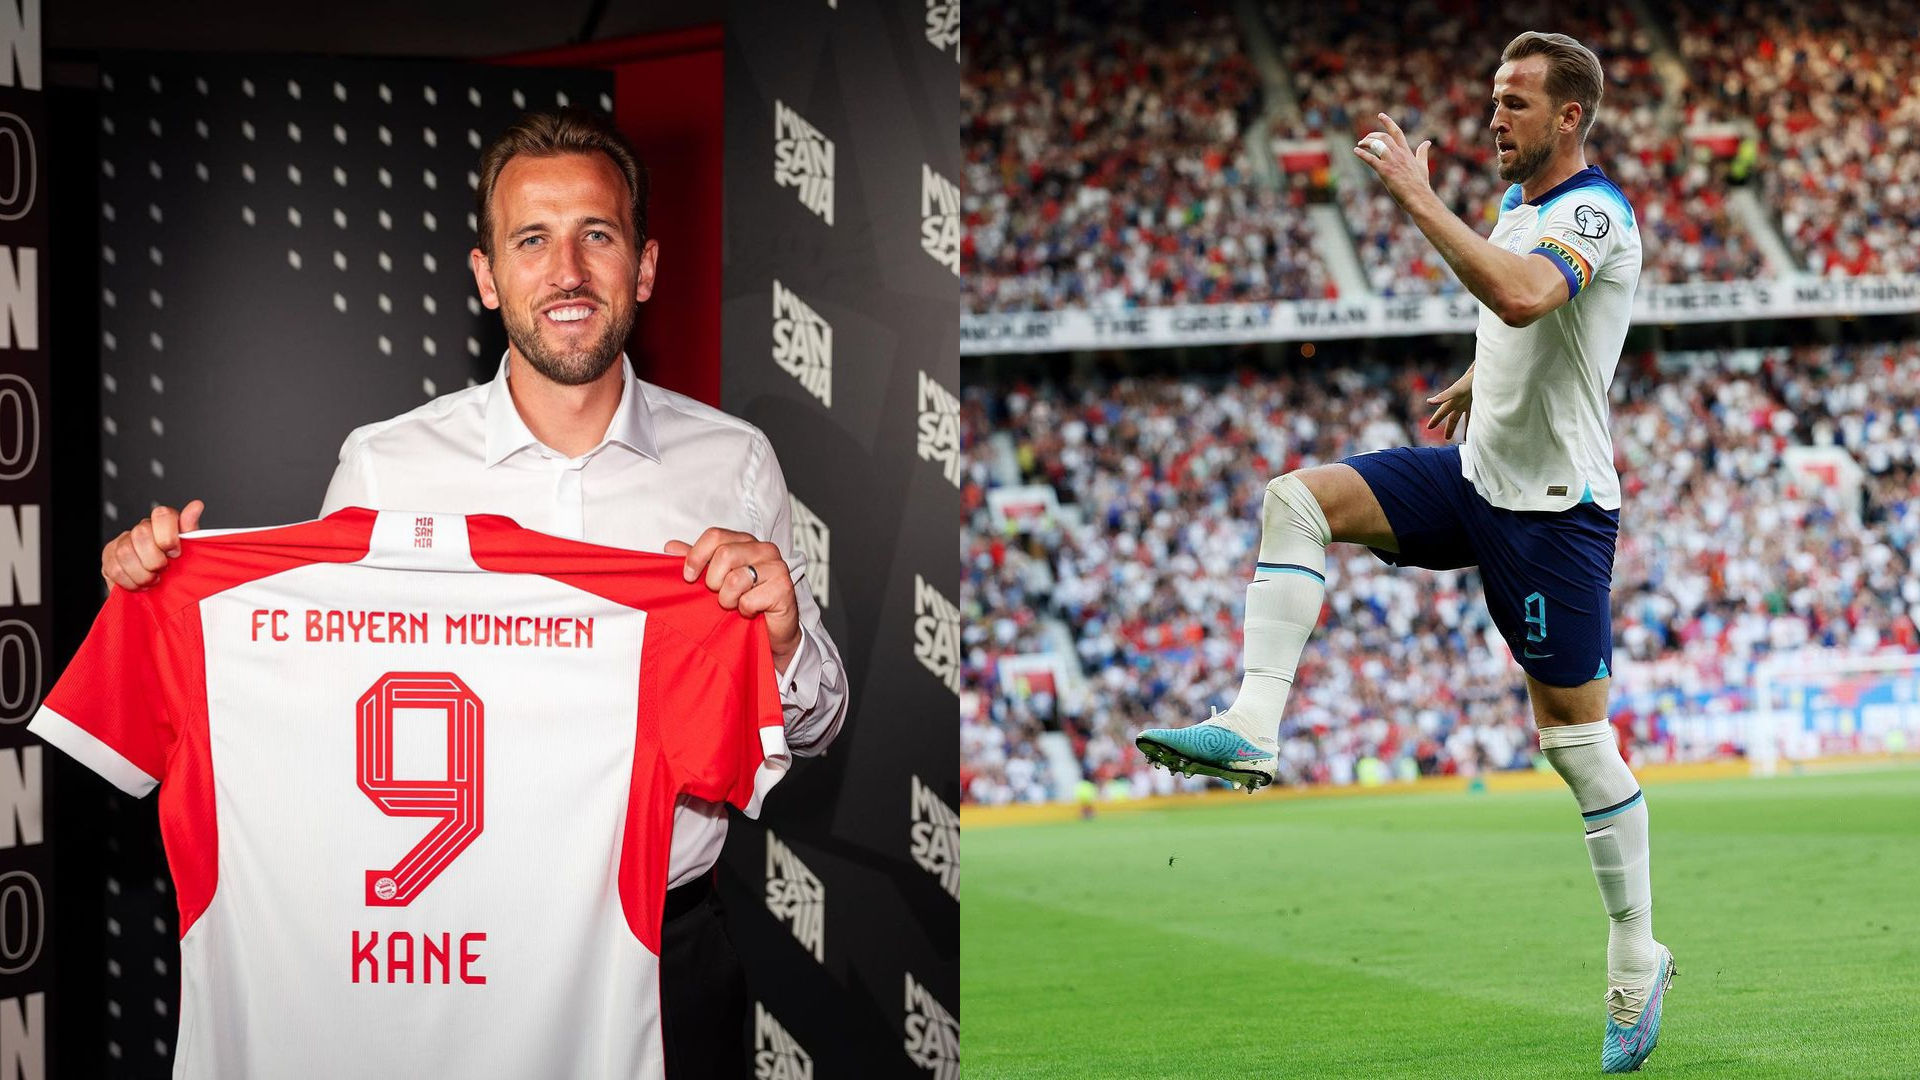 England captain Kane to sponsor shirt of former club Leyton Orient